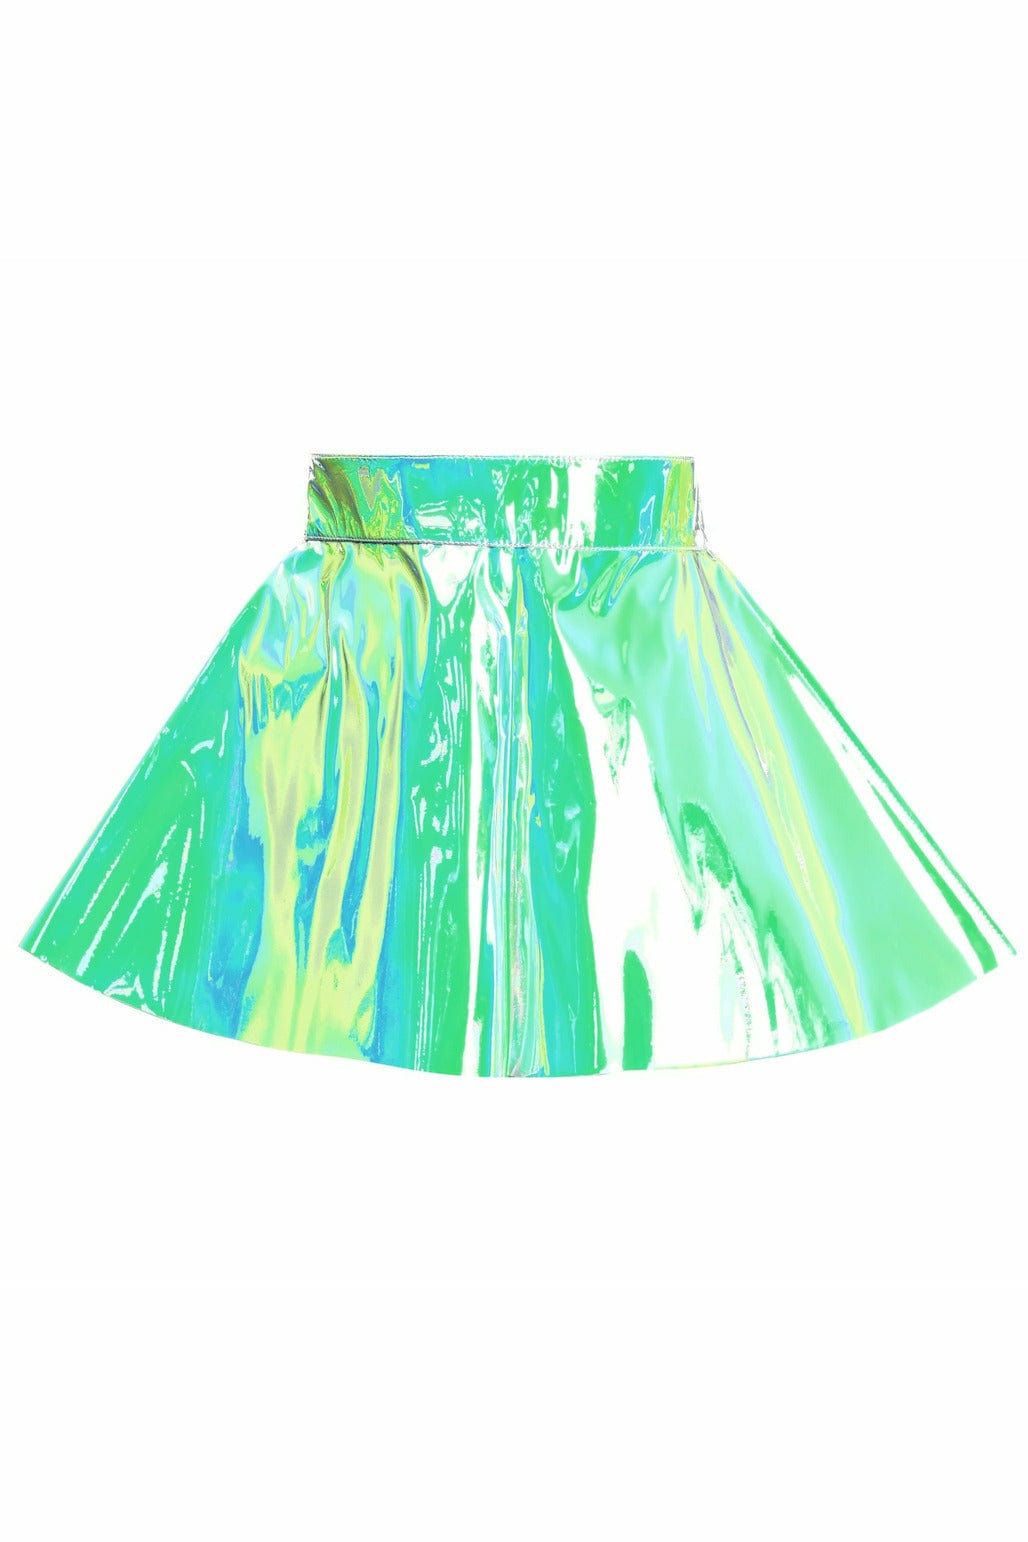 Mint Green Hologram Skater Skirt Musotica.com